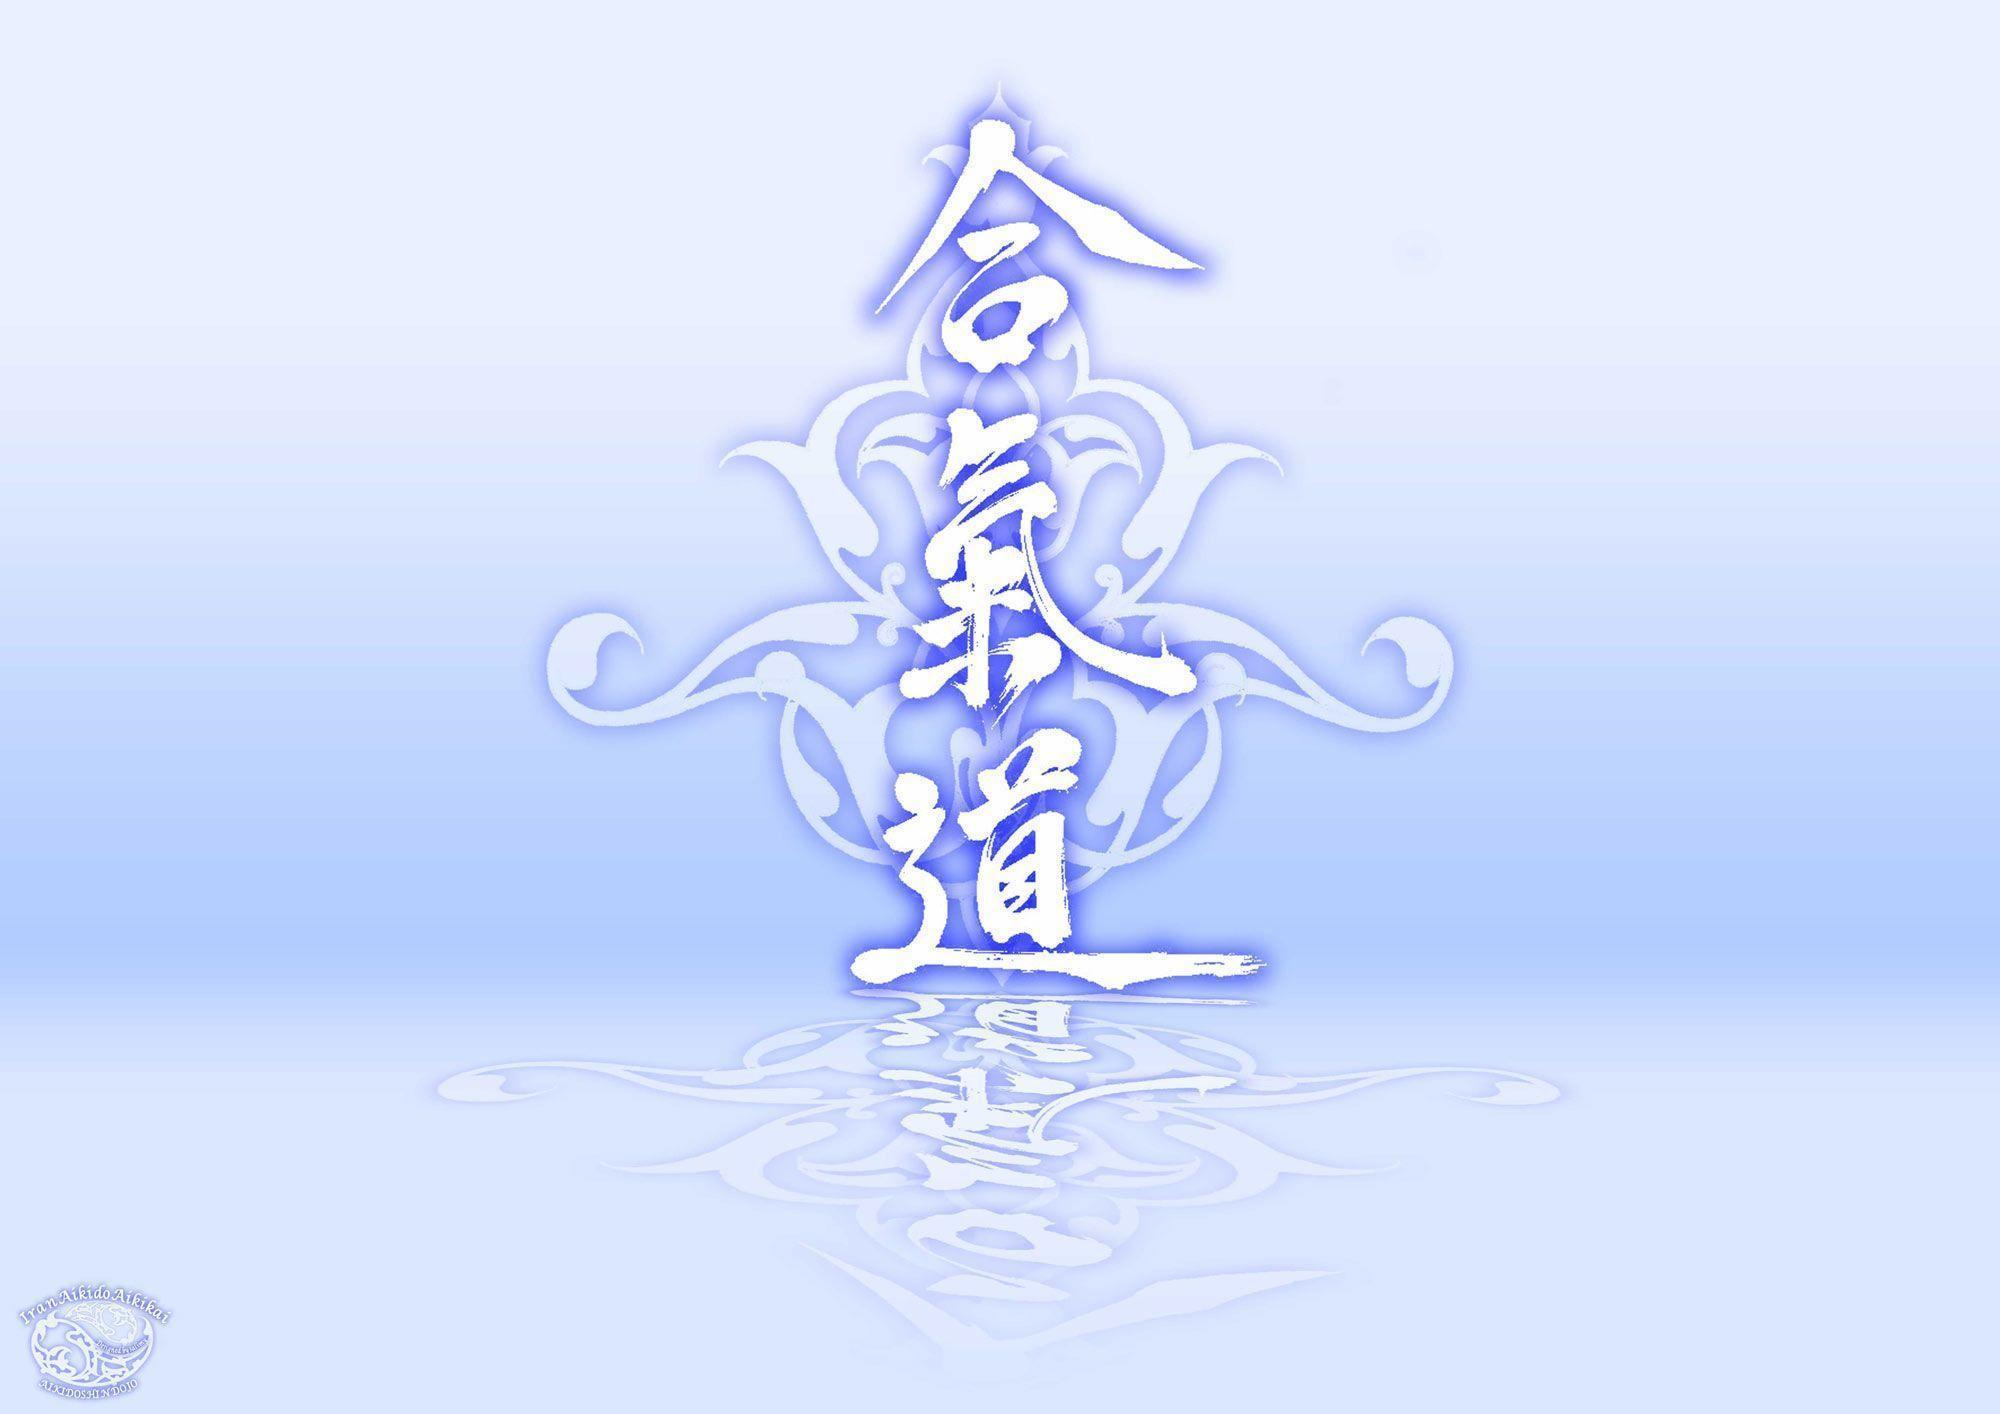 Aikido Kanji2 Wallpaper Aikido Image Gallery